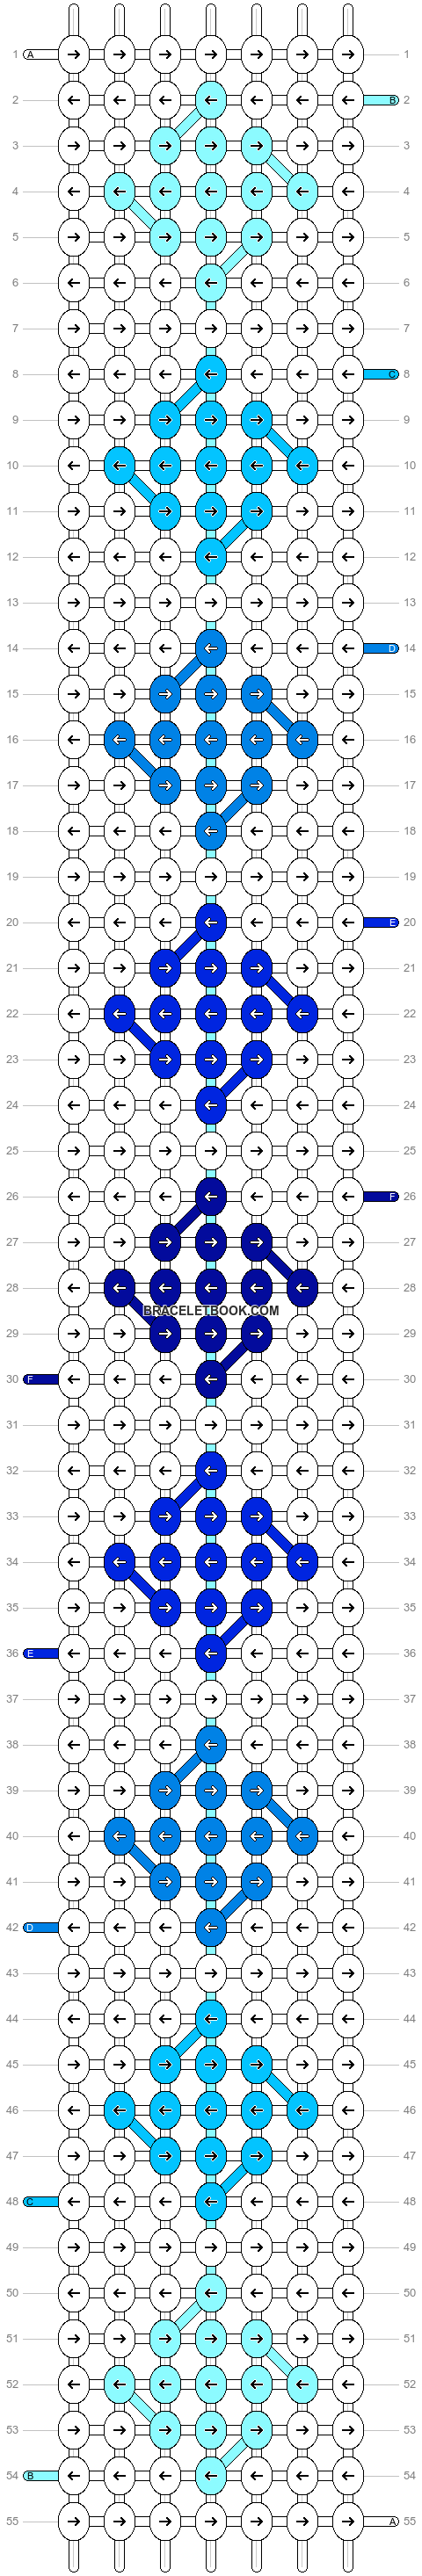 Alpha pattern #17867 variation #186674 pattern